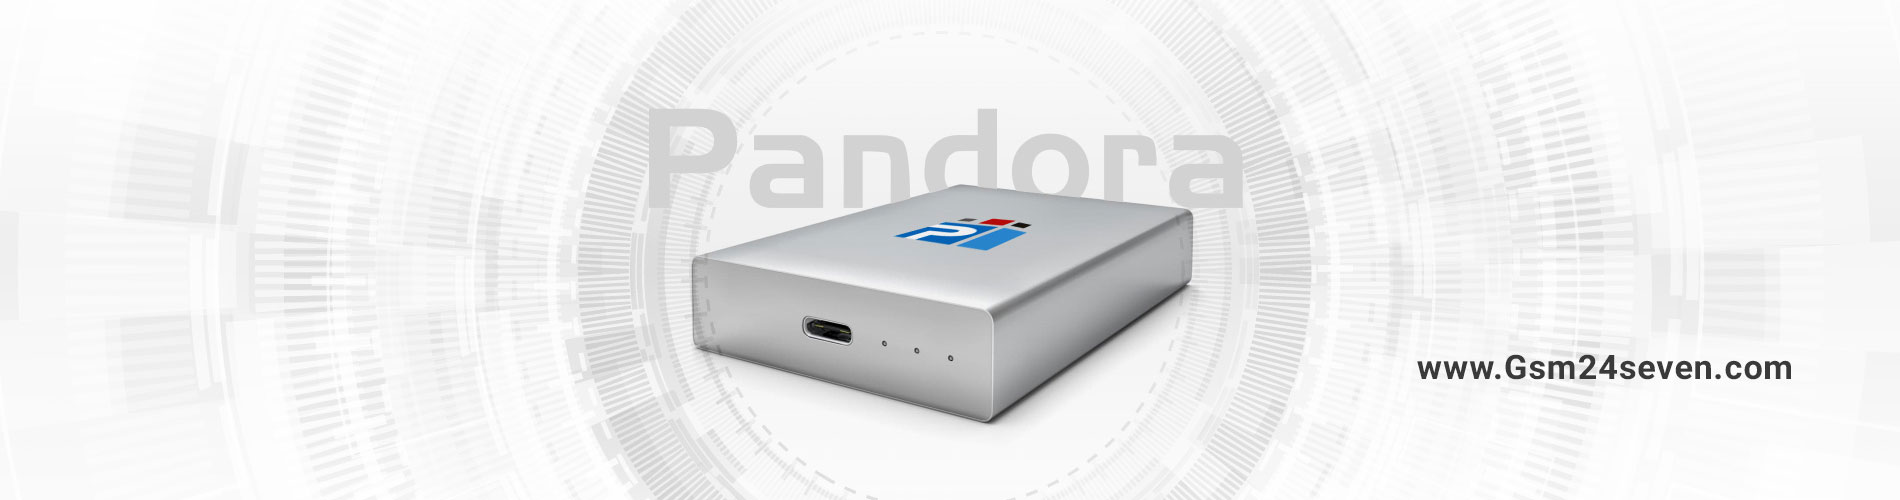 Pandora box